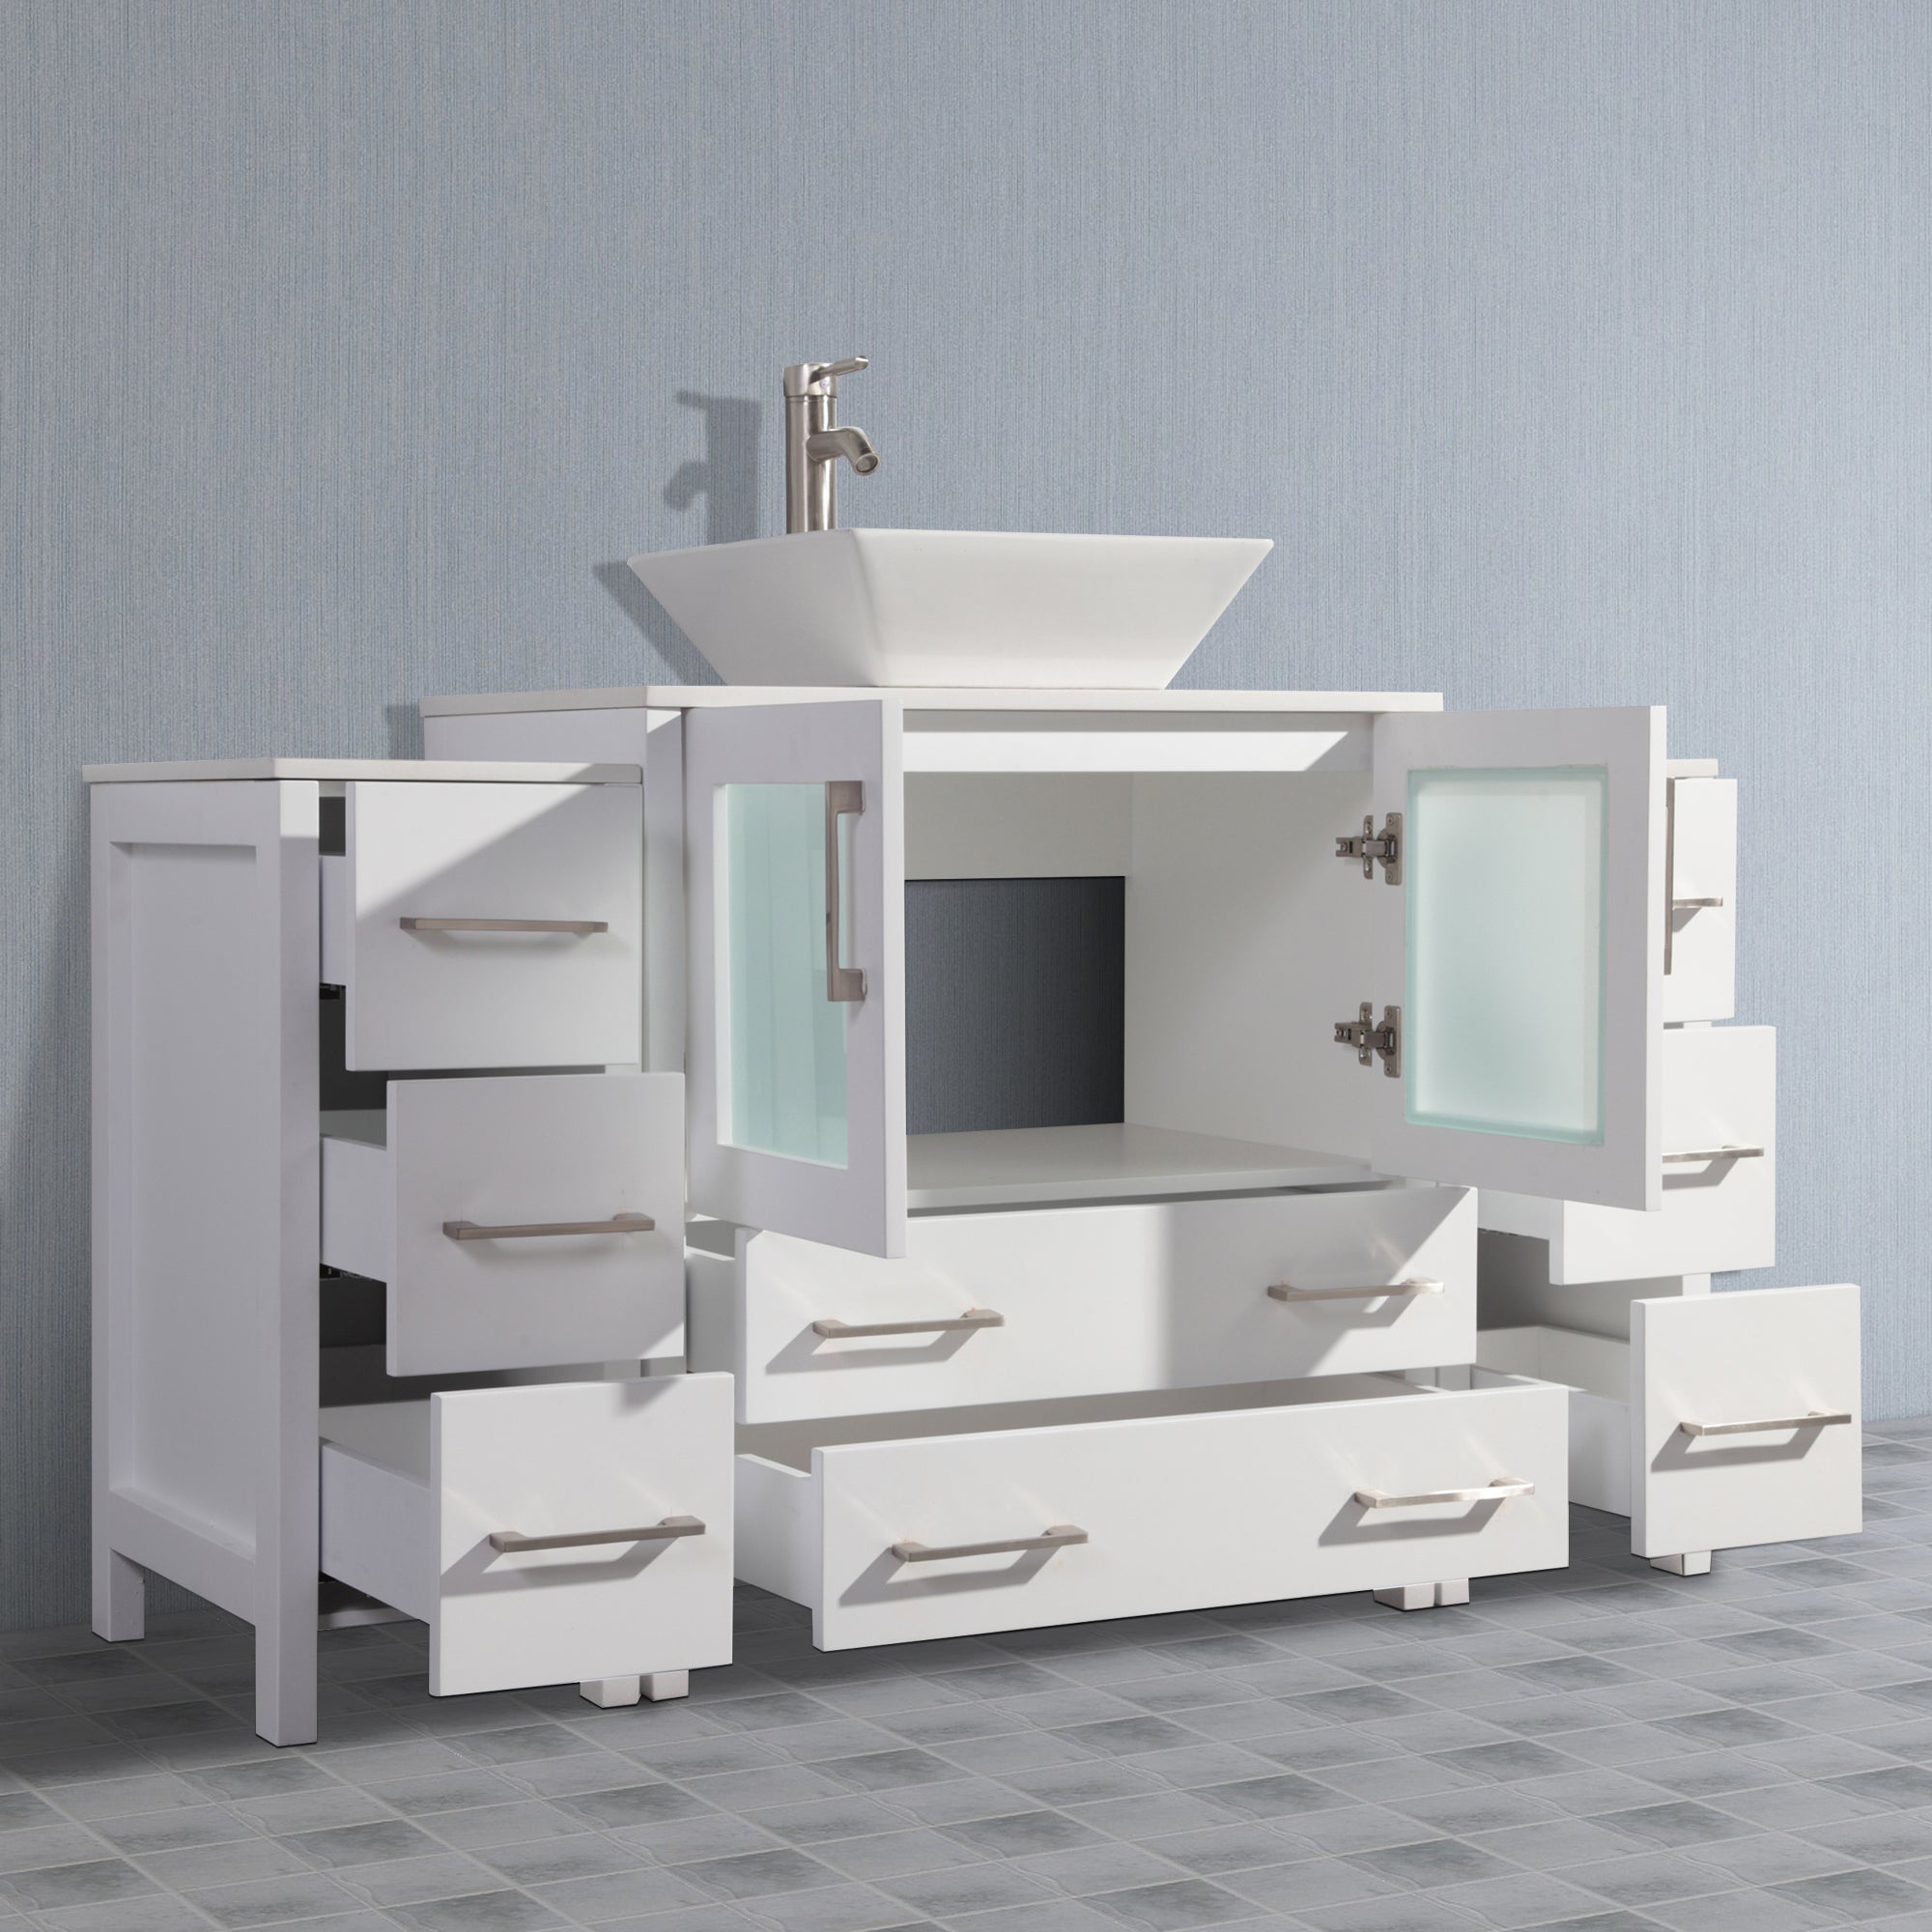 Vanity Art - Monaco 54" Single Vessel Sink Bathroom Vanity Set with Sink and Mirror - 2 Side Cabinets - Bhdepot 